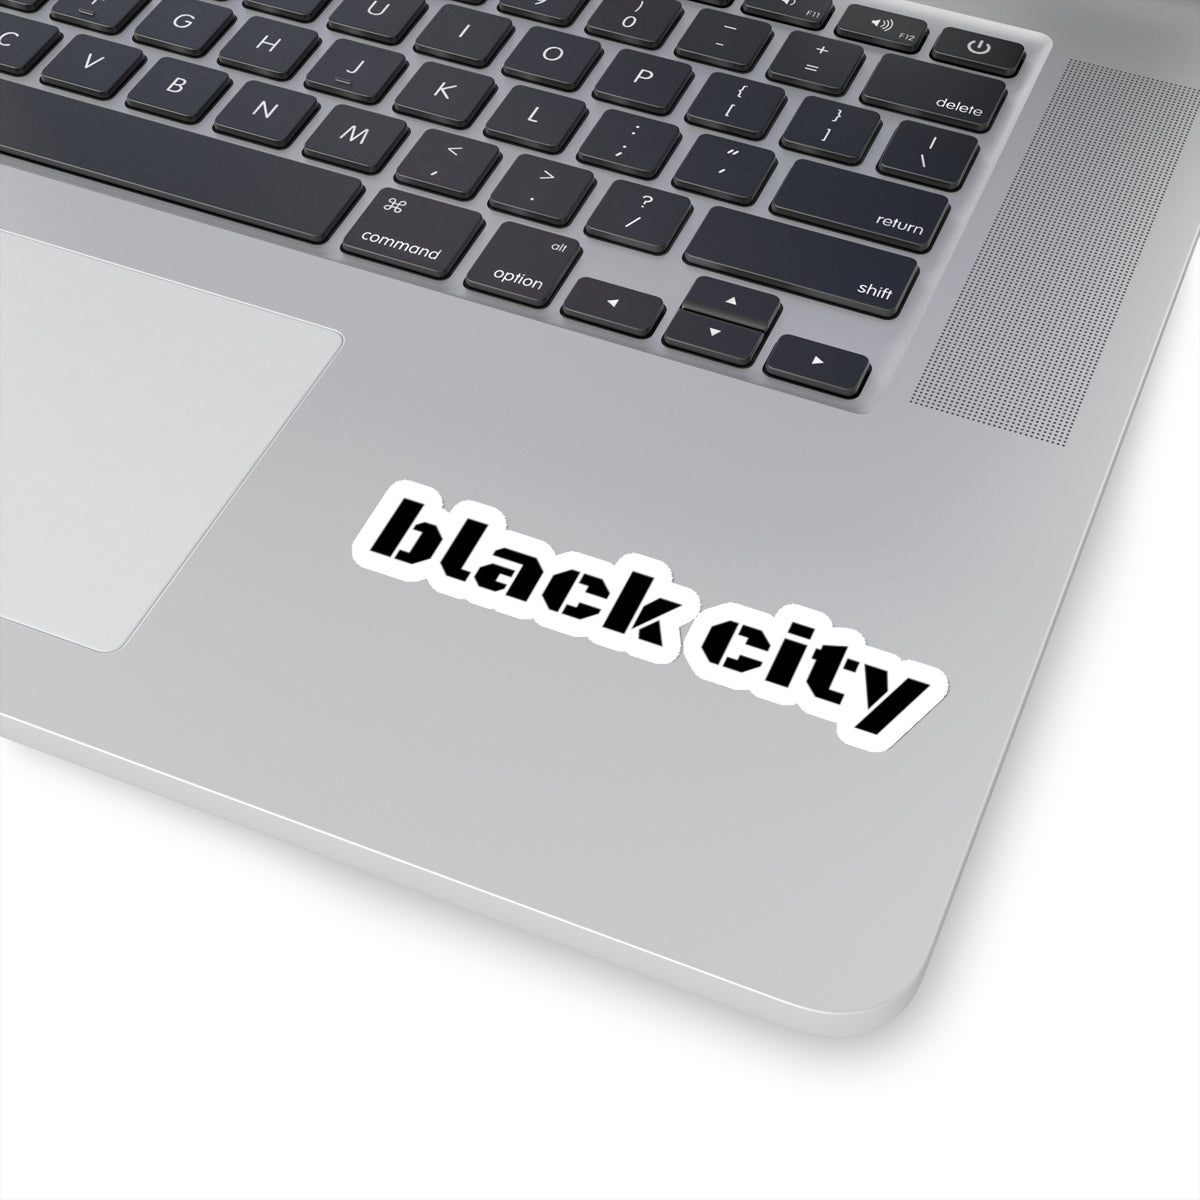 Black City Stickers